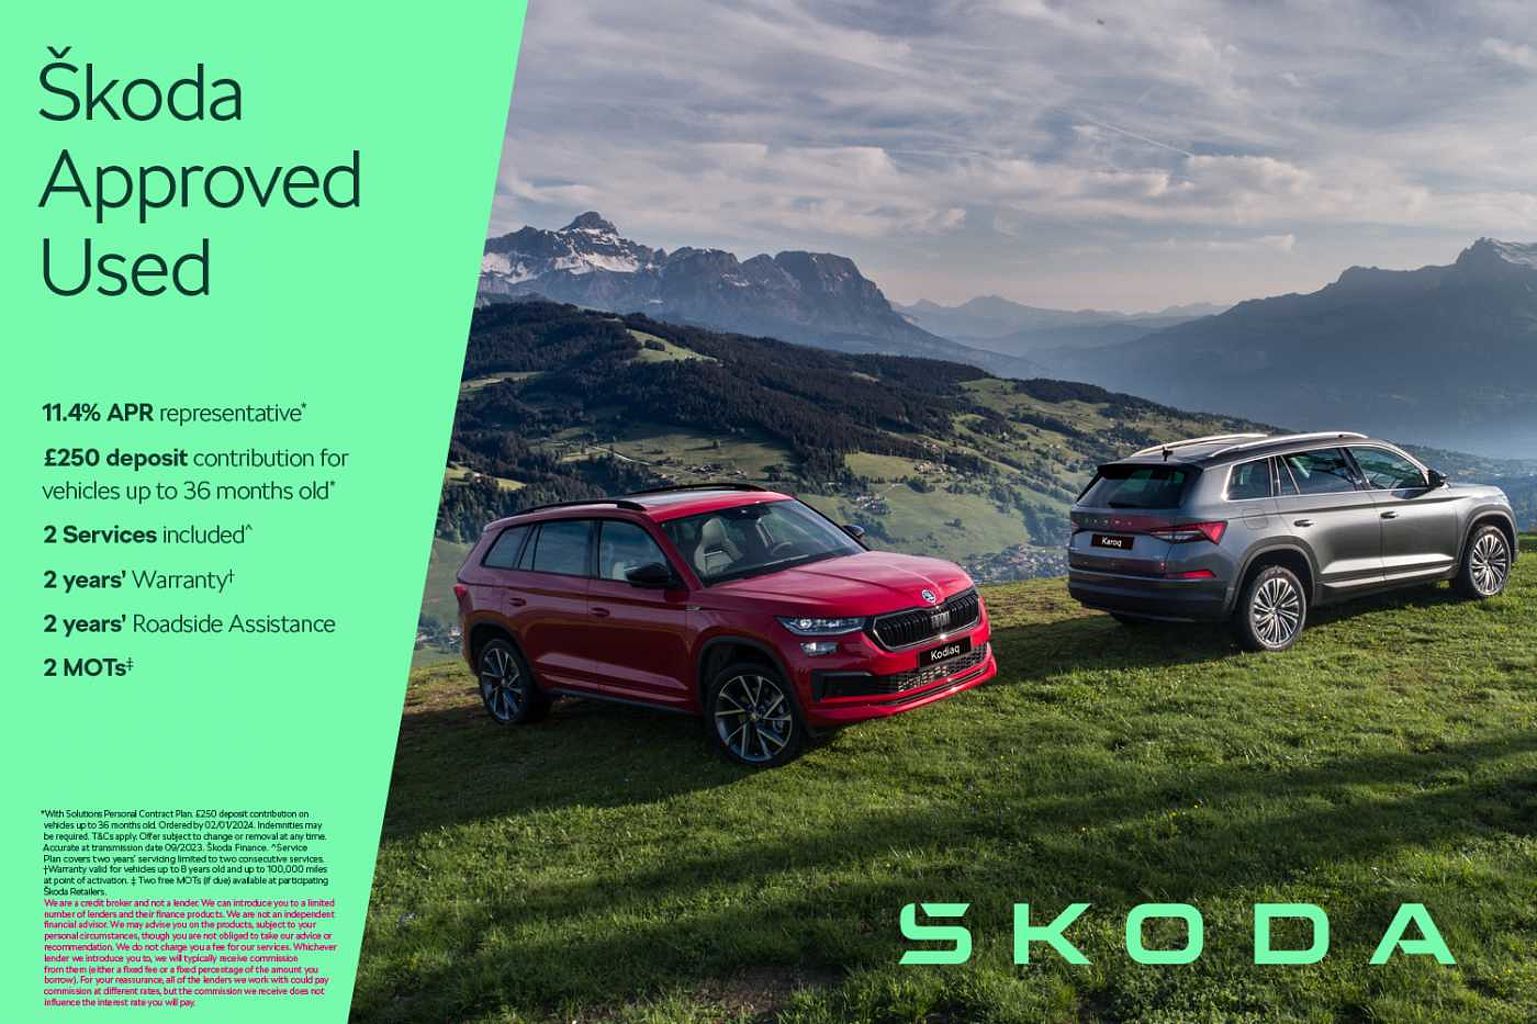 SKODA Kodiaq 1.5 TSI (150ps) SE (7 seats) ACT SUV